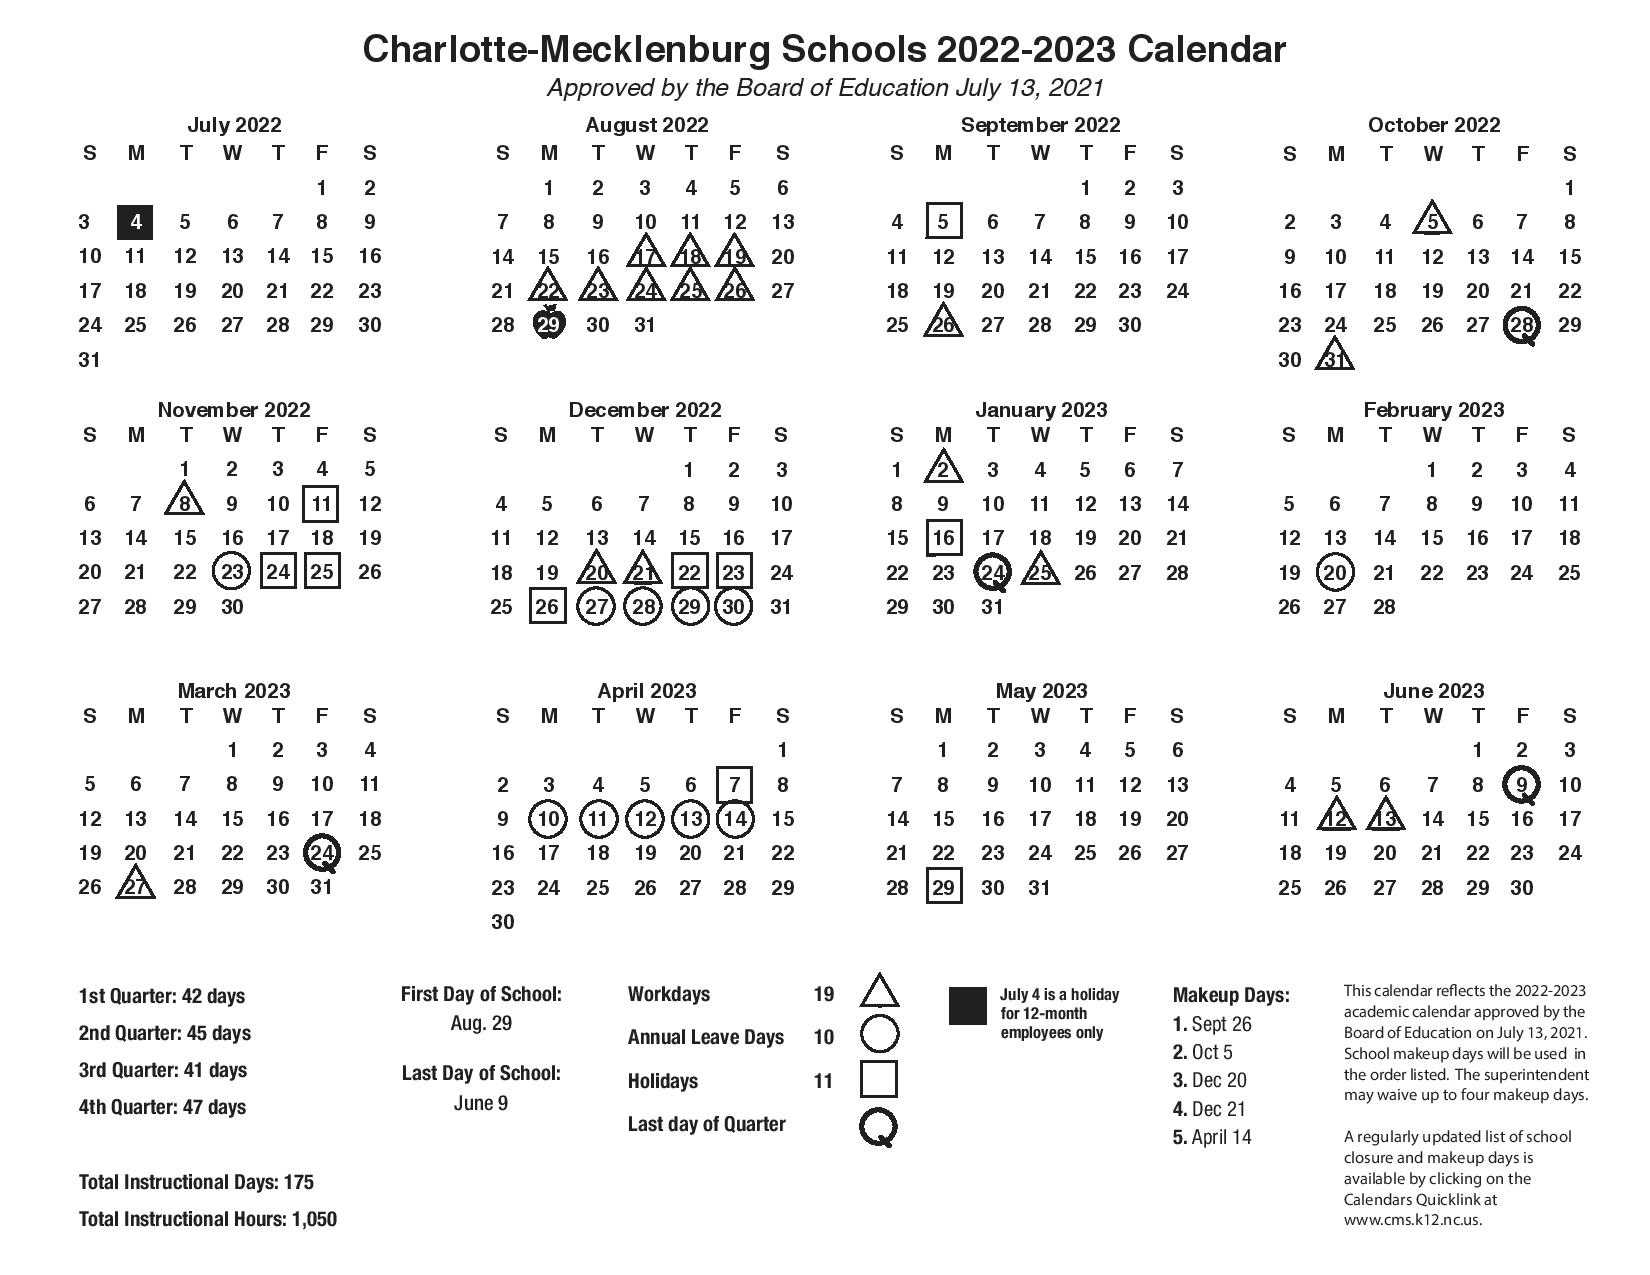 CMS Schools Calendar 2023 (CharlotteMecklenburg Schools)